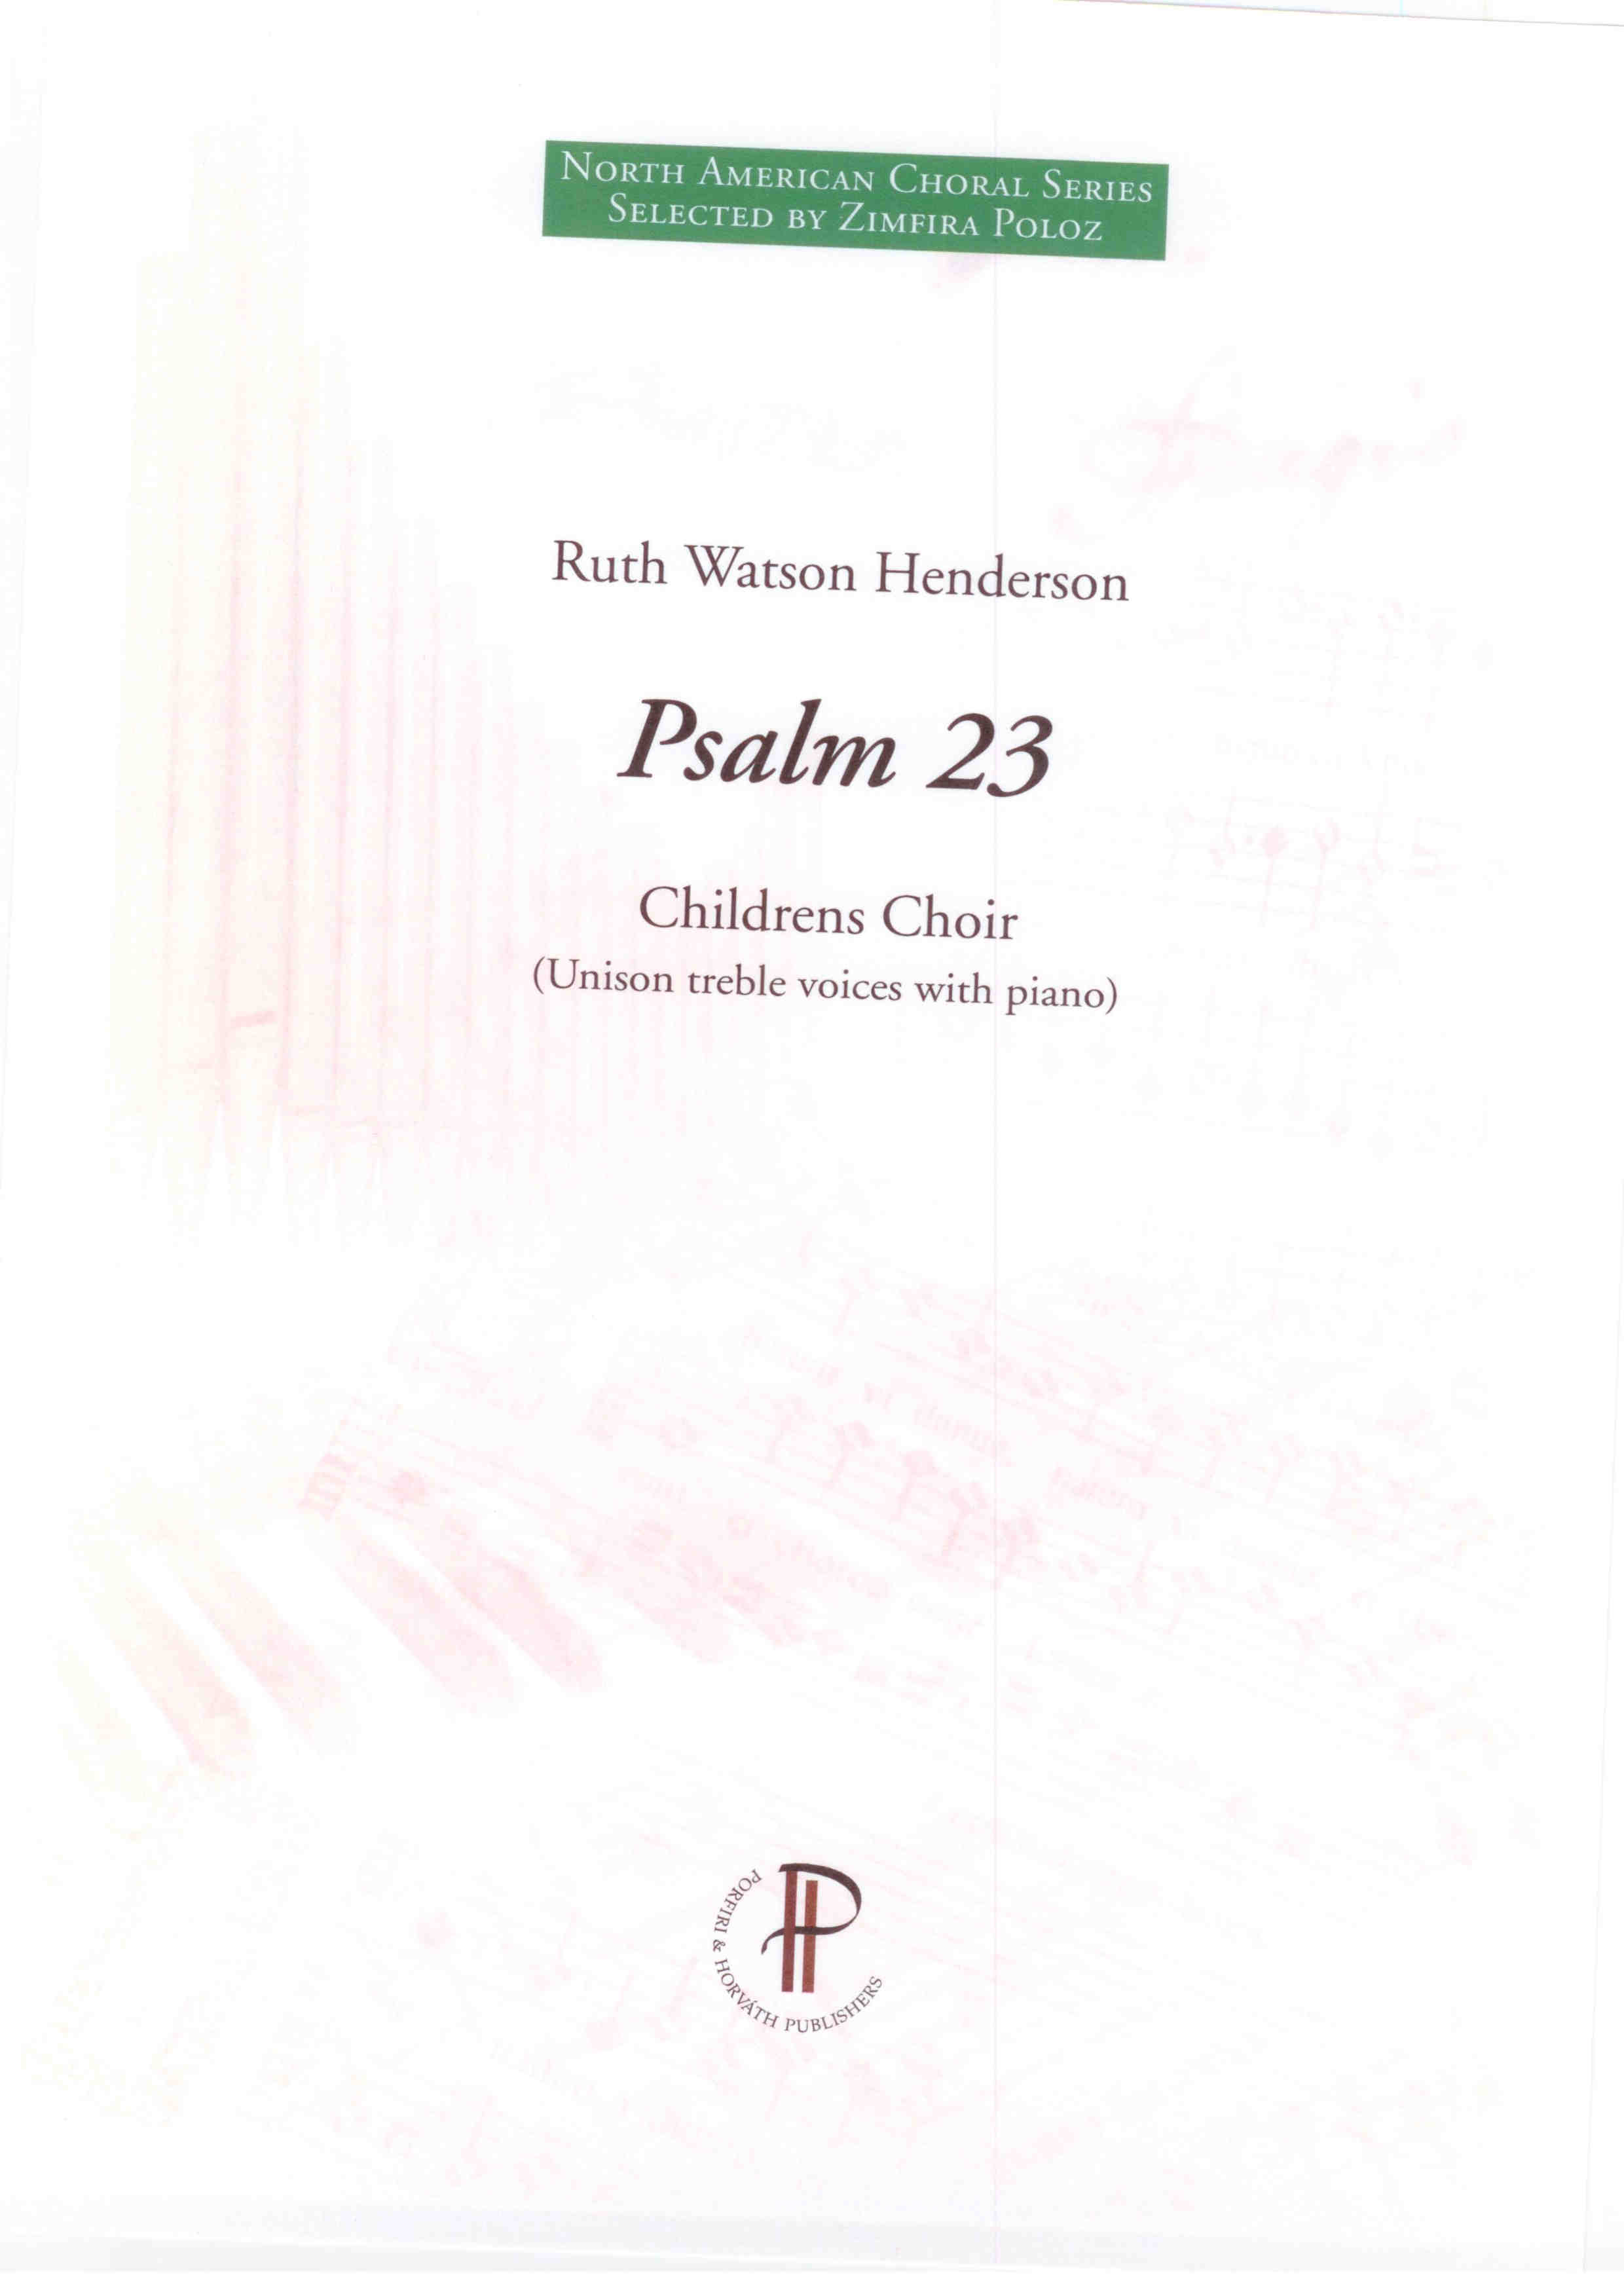 Psalm 23 - Show sample score